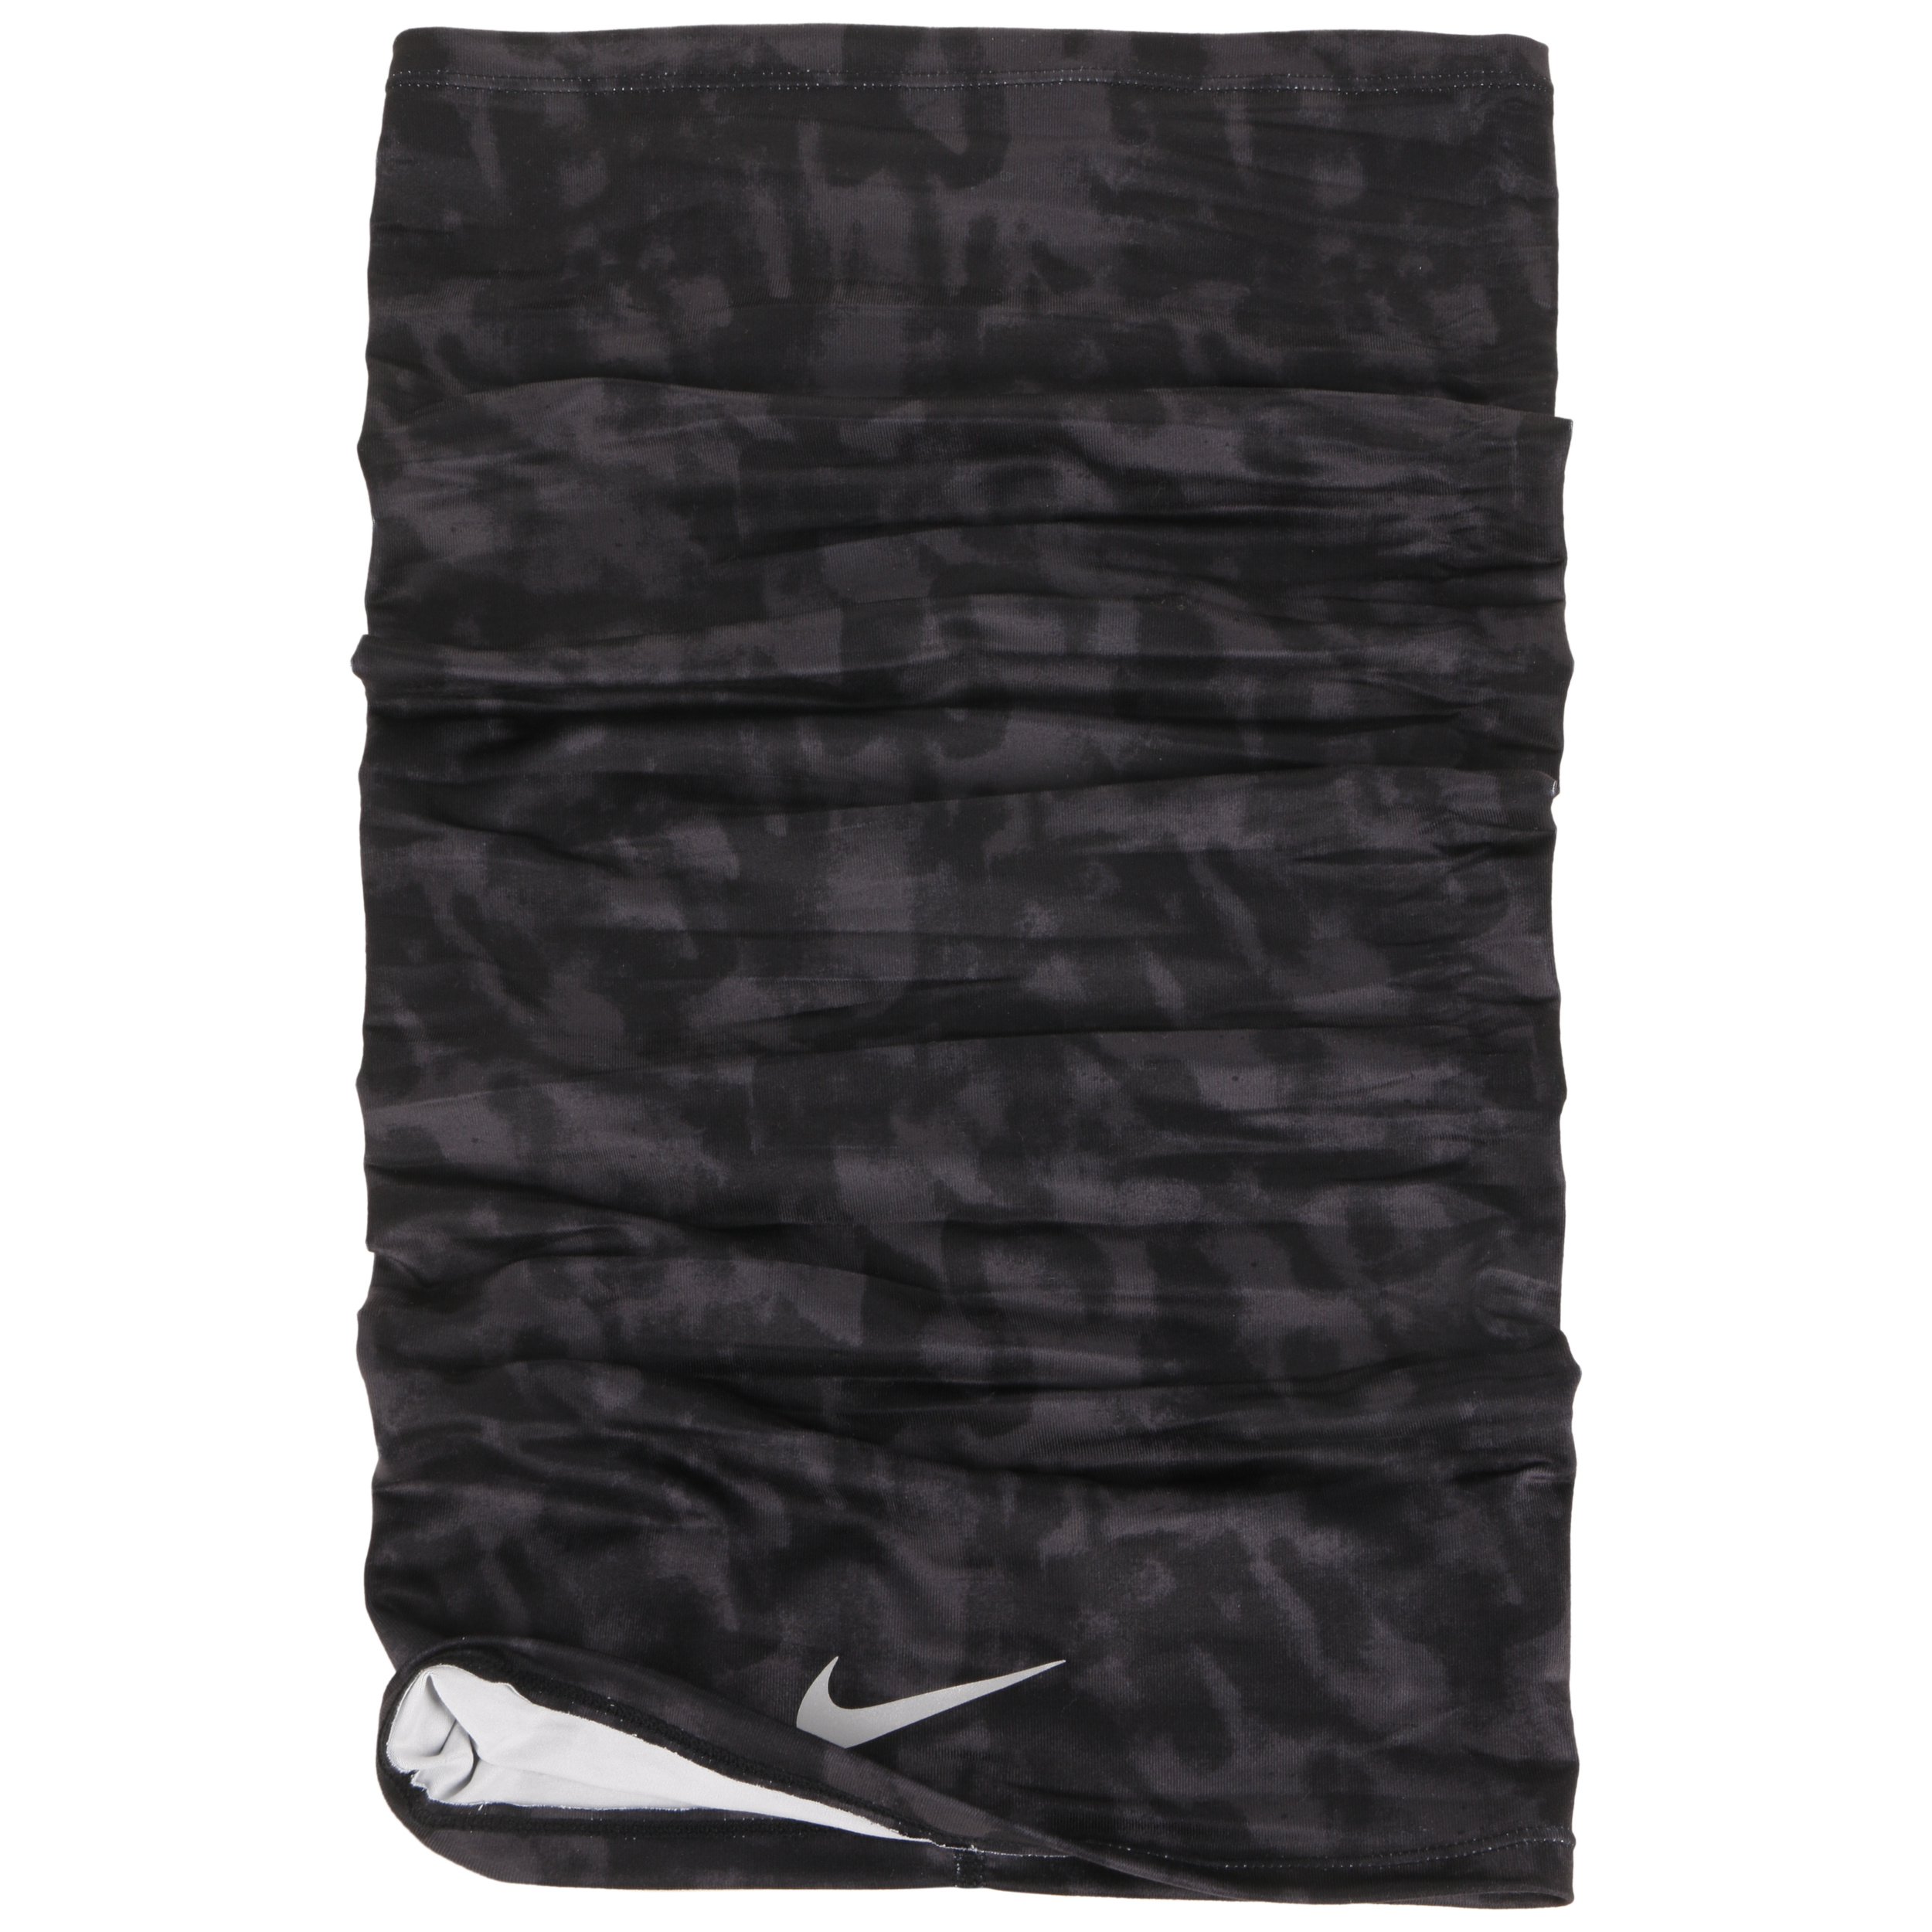 Nike Dri-Fit Printed Bandana (Black/White) Unisex, Camo/Black